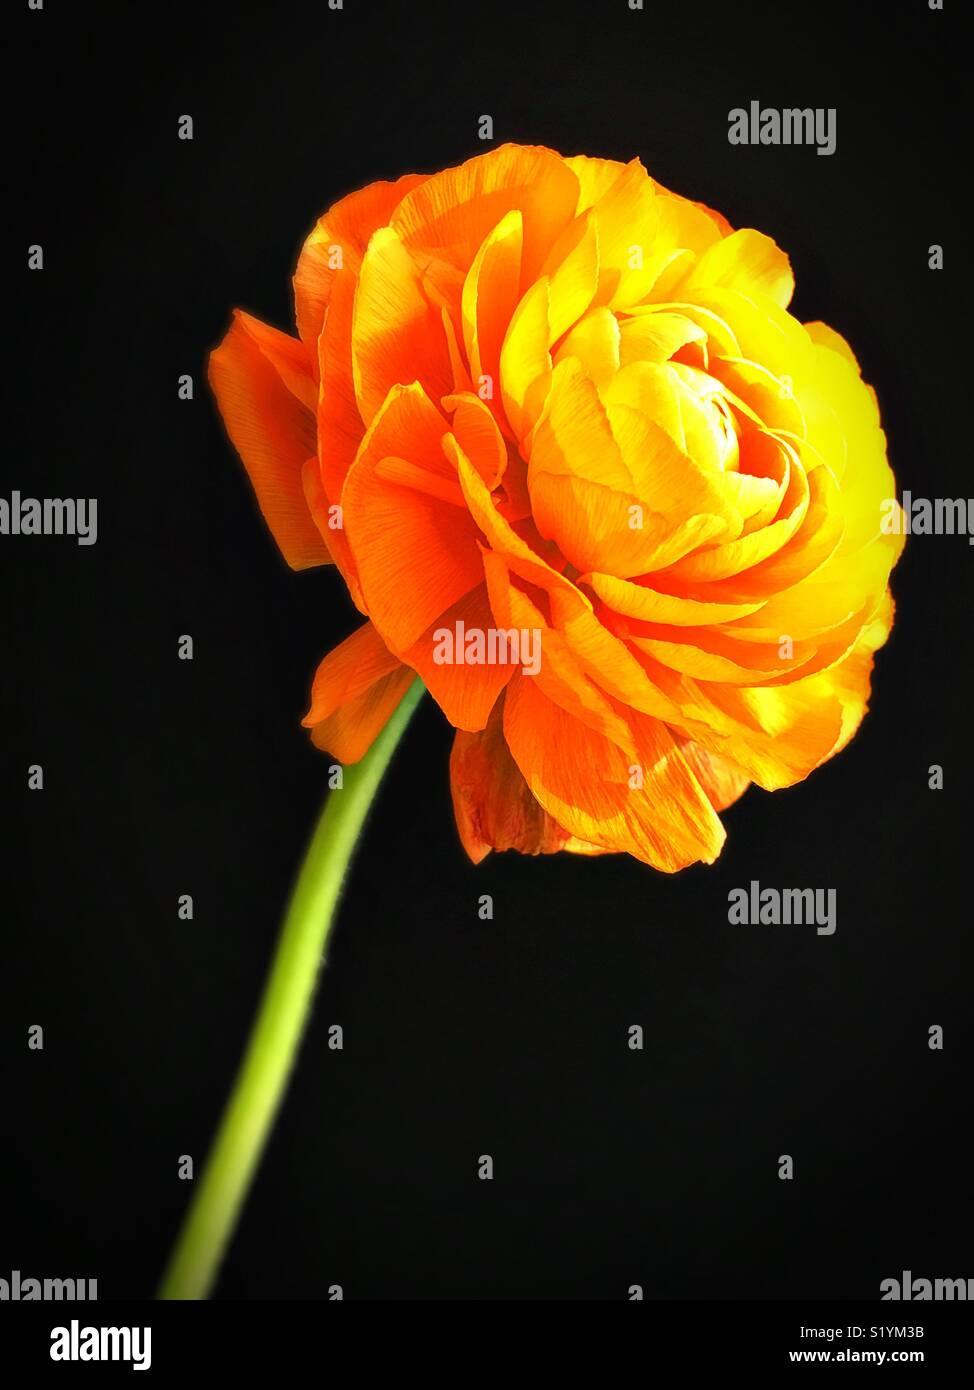 Orange ranunculus flower against black background. Stock Photo